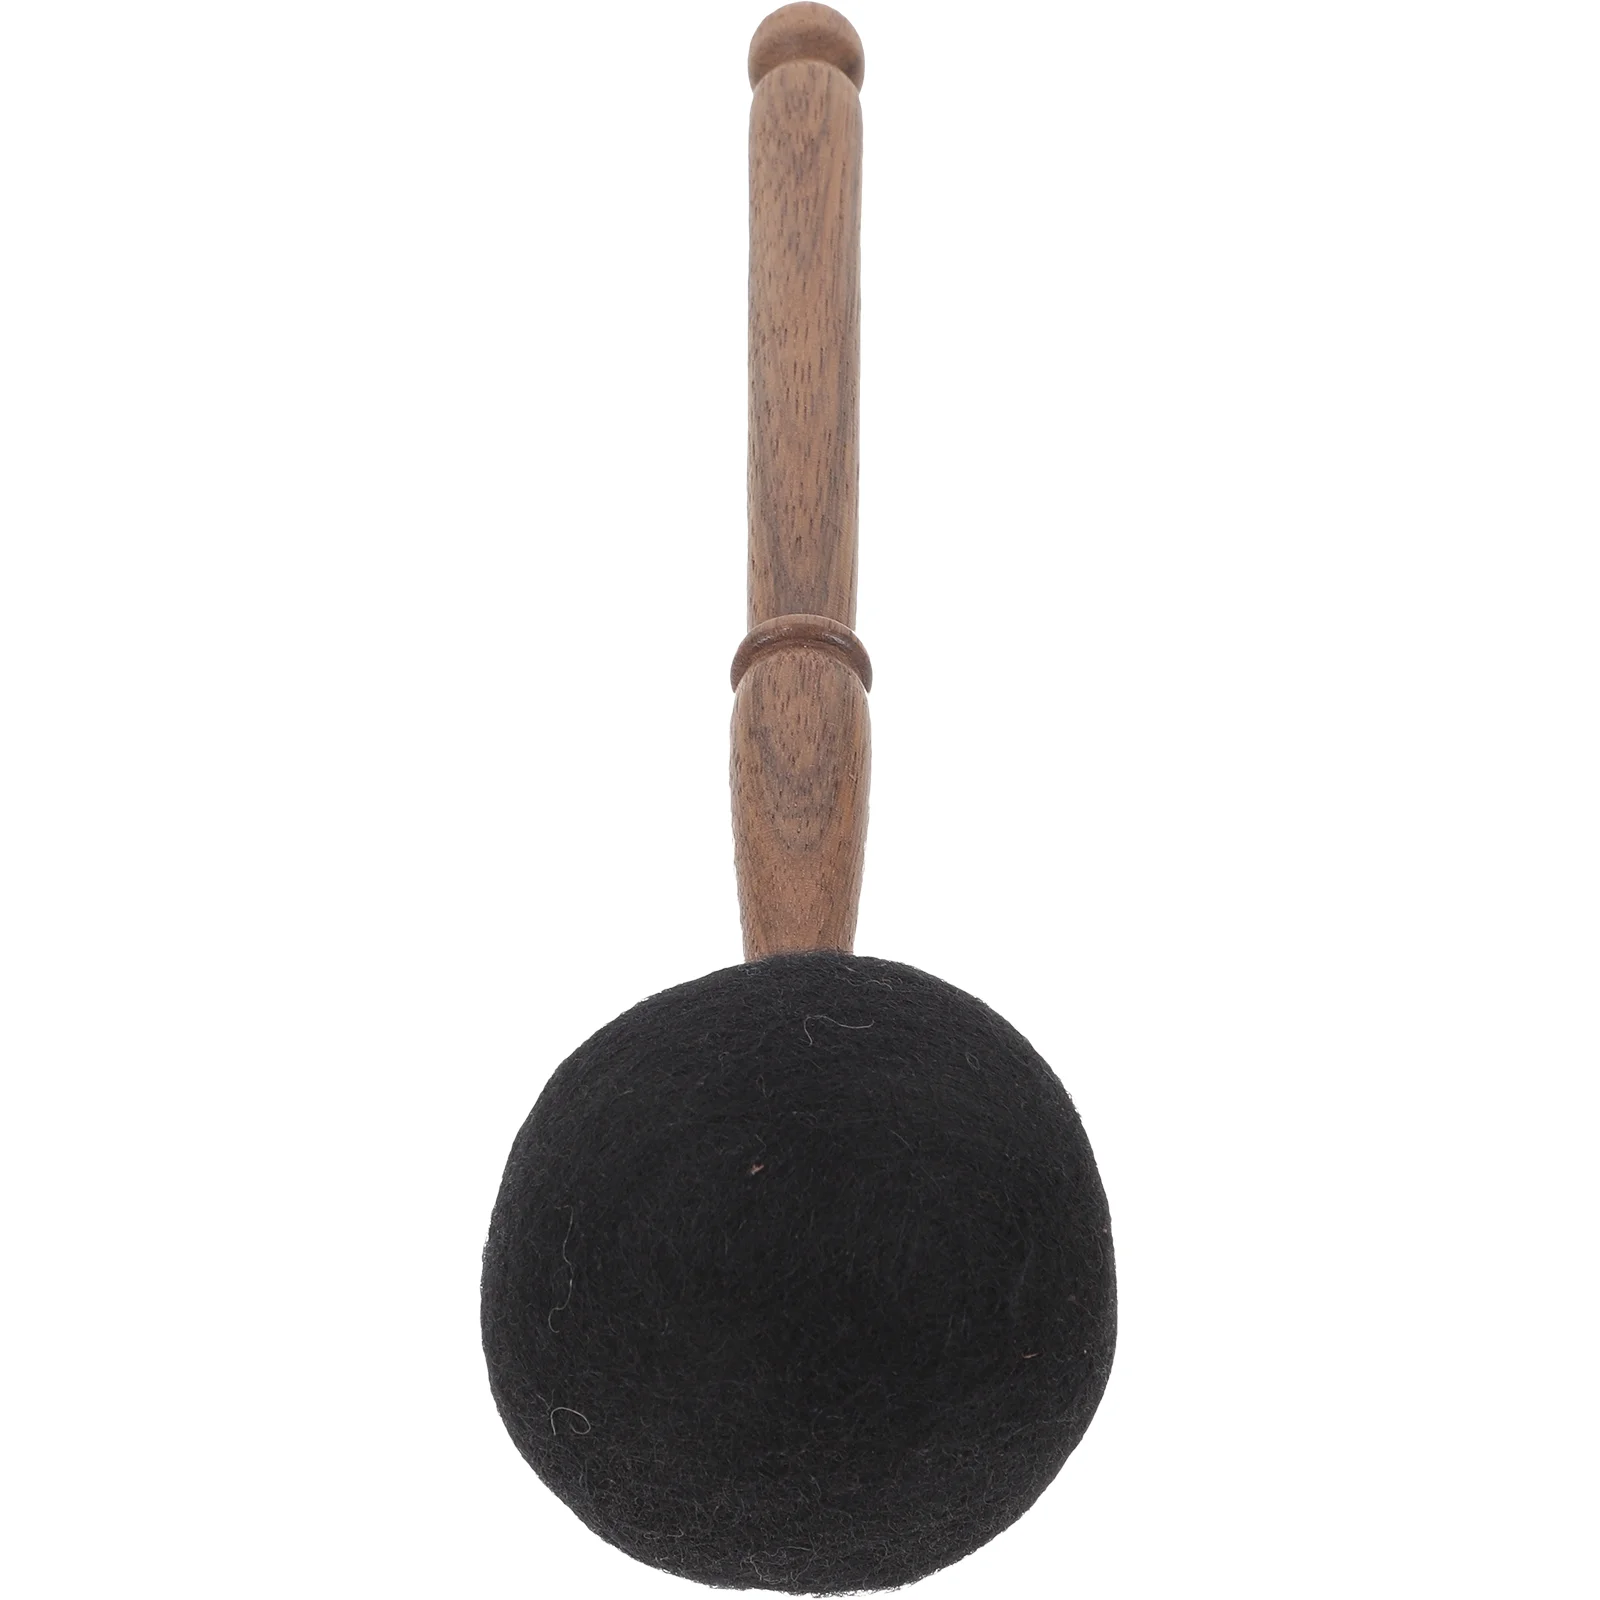 

Buddha Sound Bowl Hammer Wooden Singing Mallet Small Striker Stick Parts Meditation